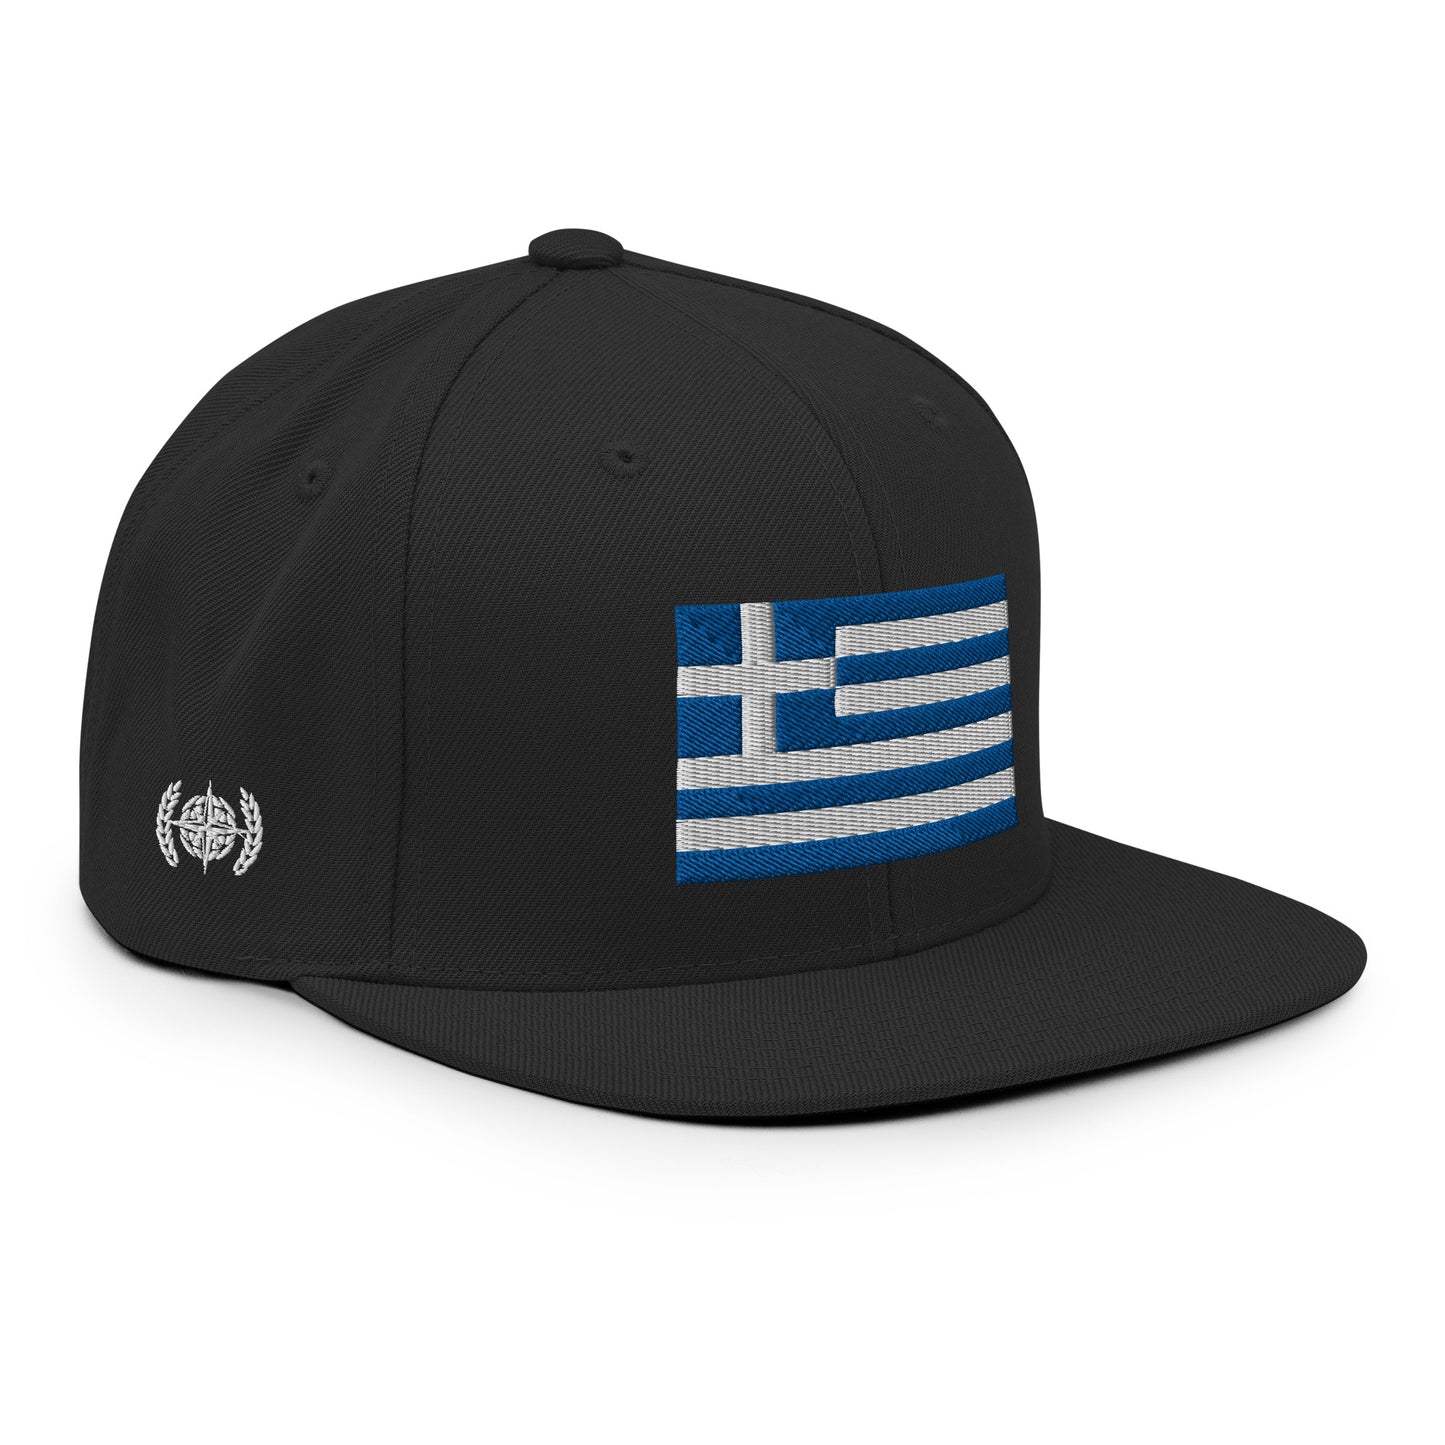 Heritage & Honor Snapback Cap 'Greece' 2